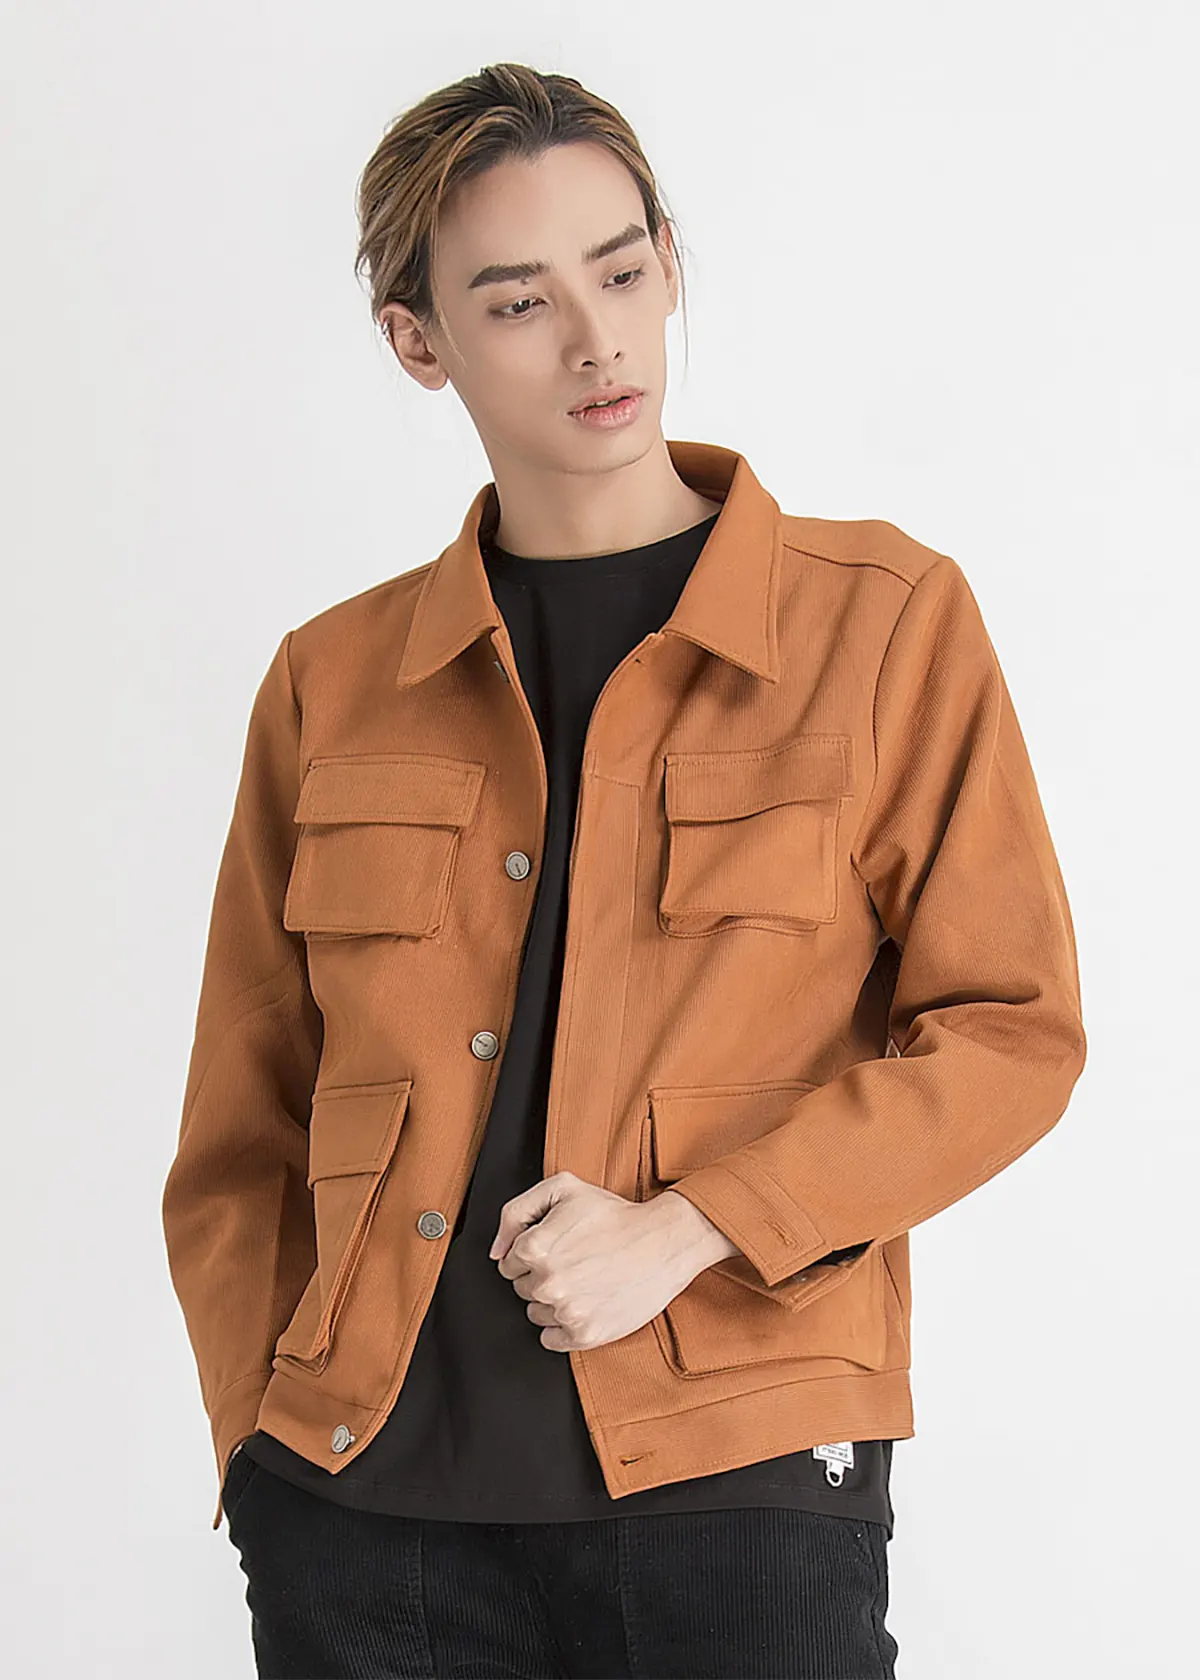 Scandinavian style dark brown leather jacket